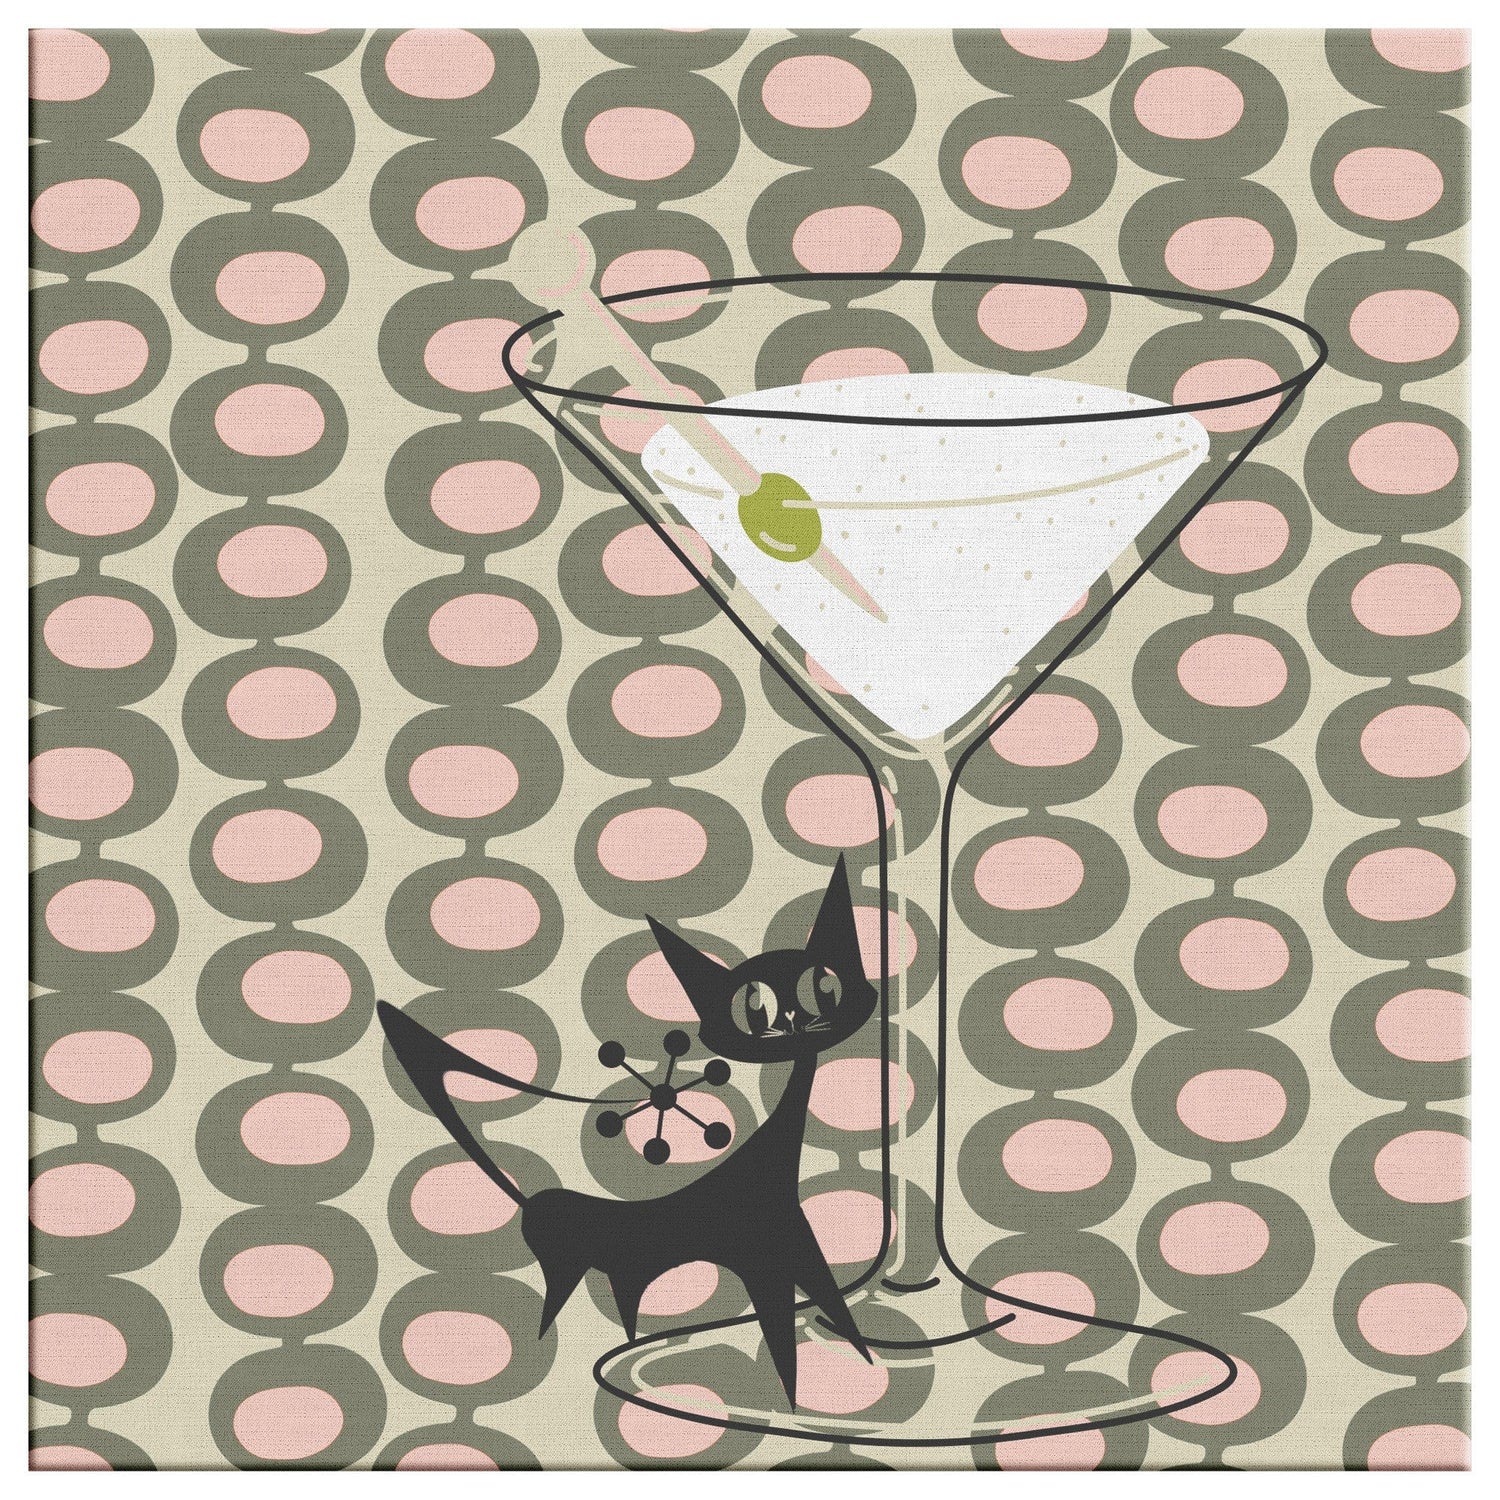 Atomic Lounge, Dirty Martini Atomic Cat, Mid Century Modern Wall Art Wall Art 8x8 / 1.25